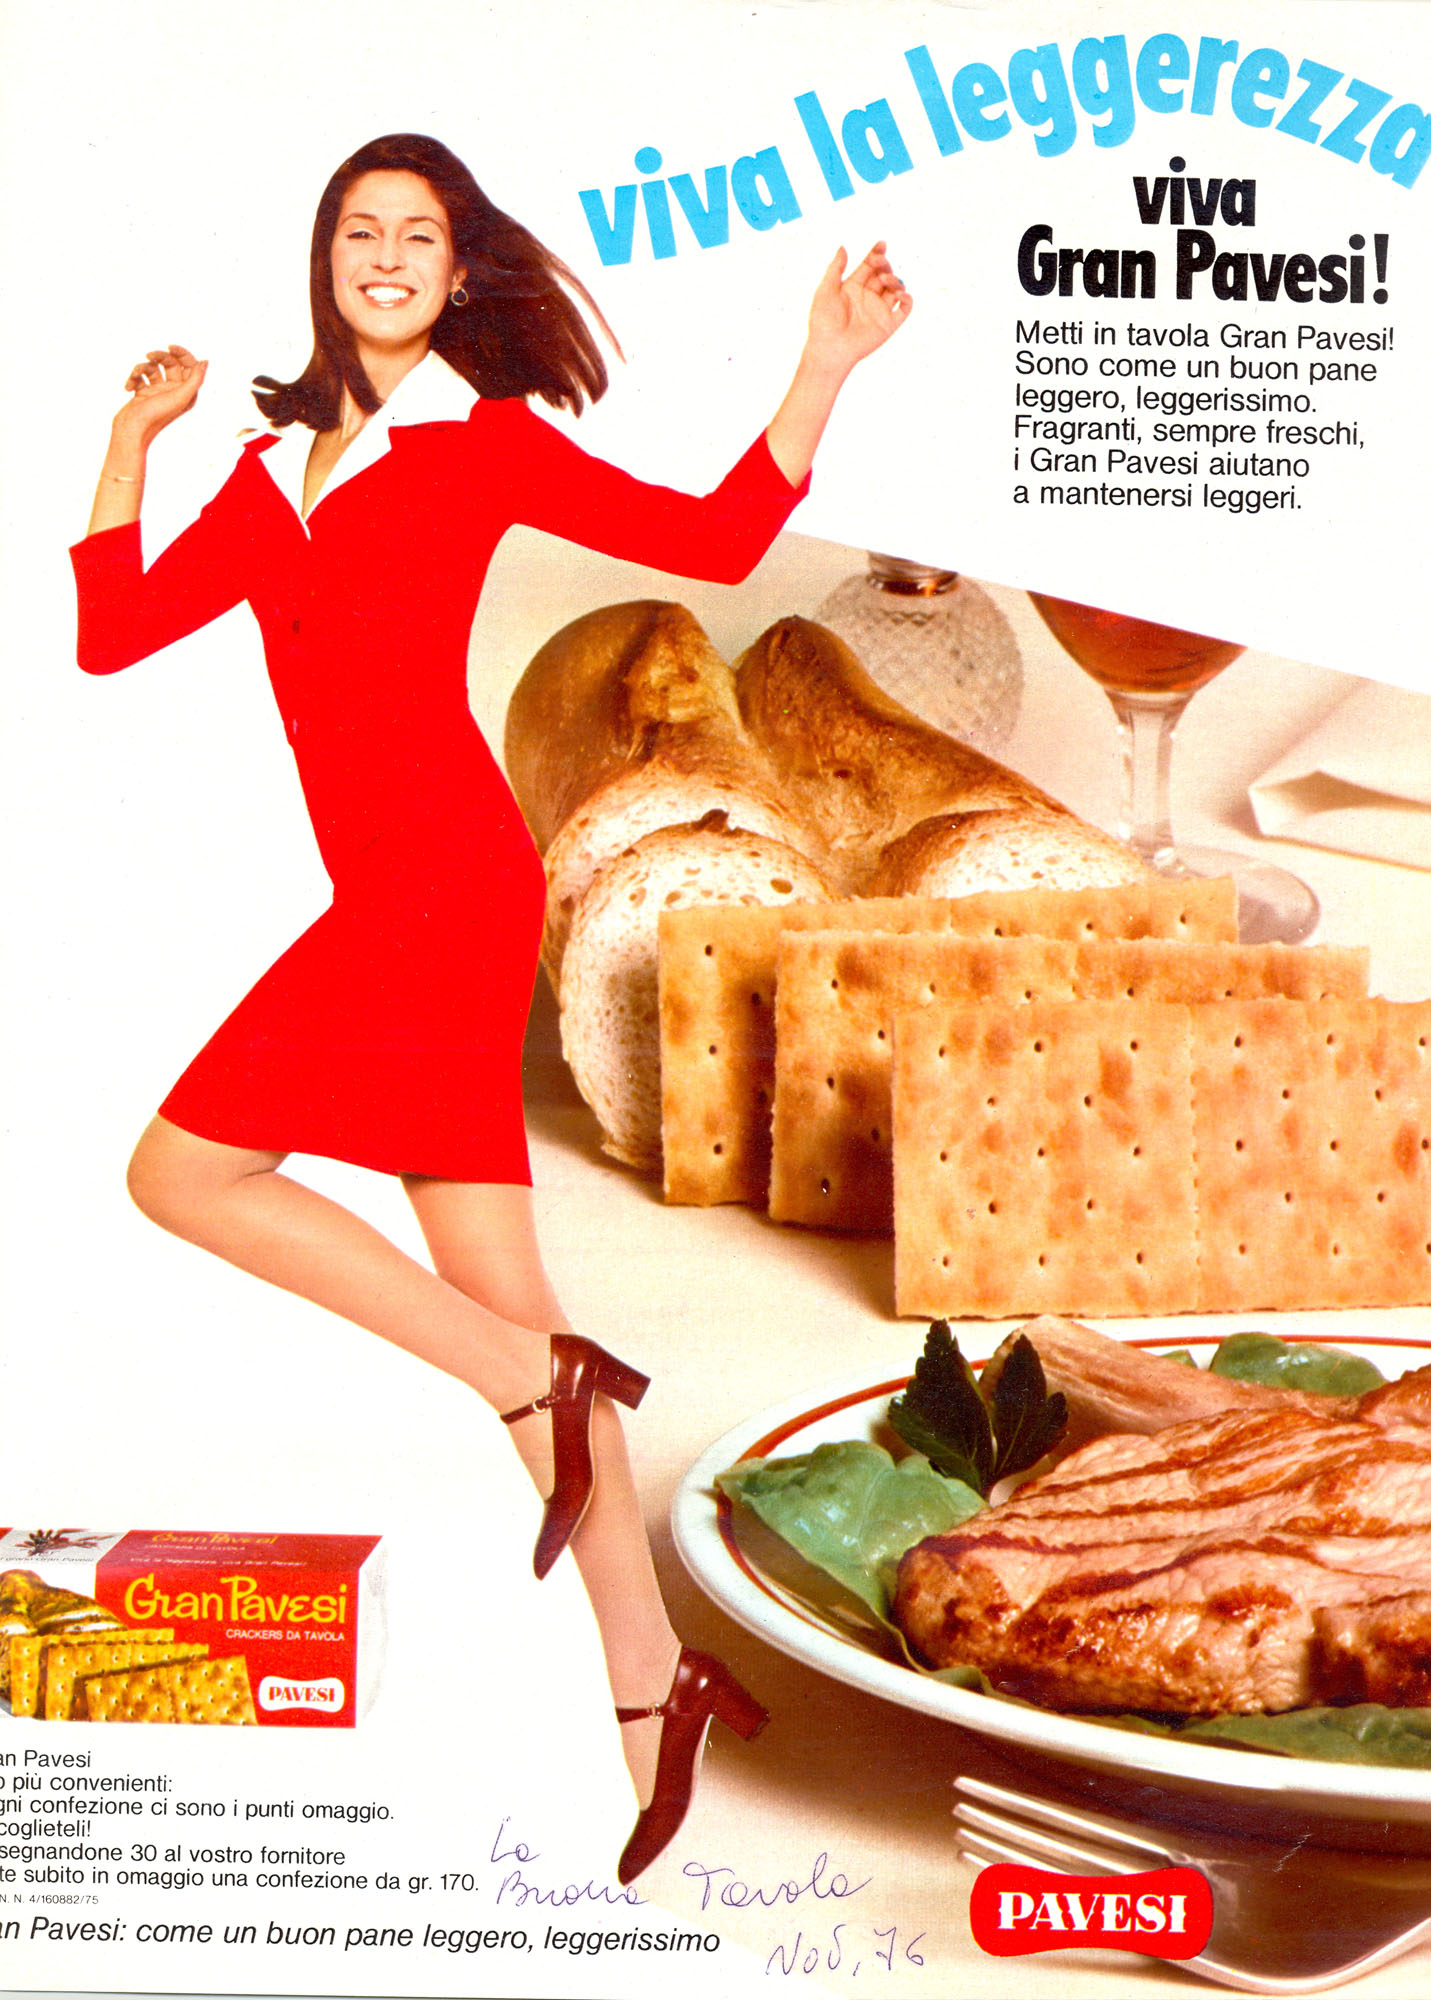 Press advertising Gran Pavesi Crackers, 1976